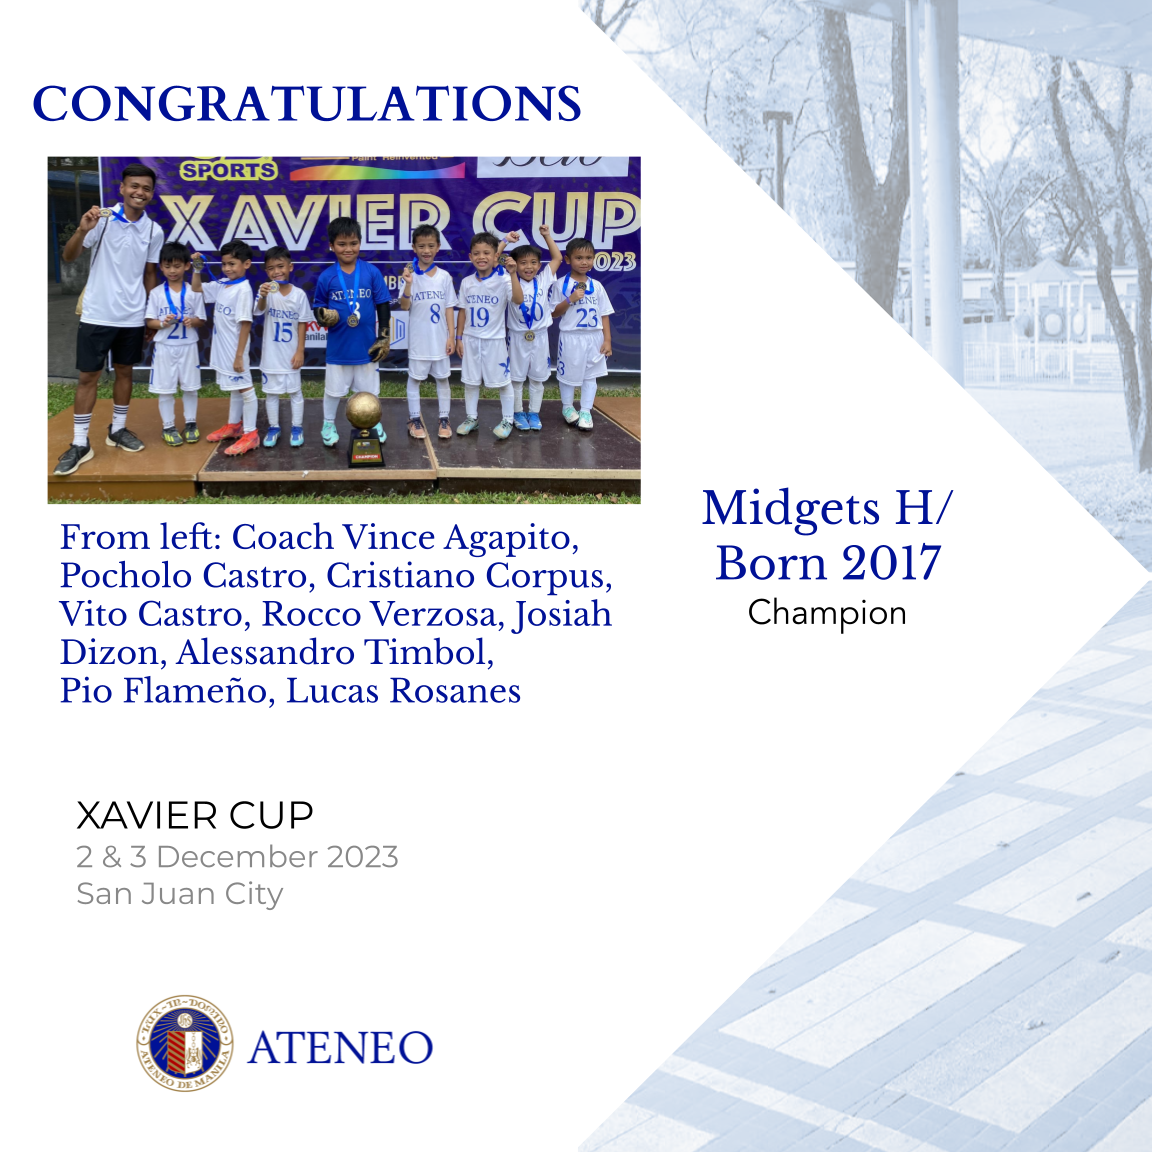 Midgets H/ Born-2017 team: Xavier Cup champion